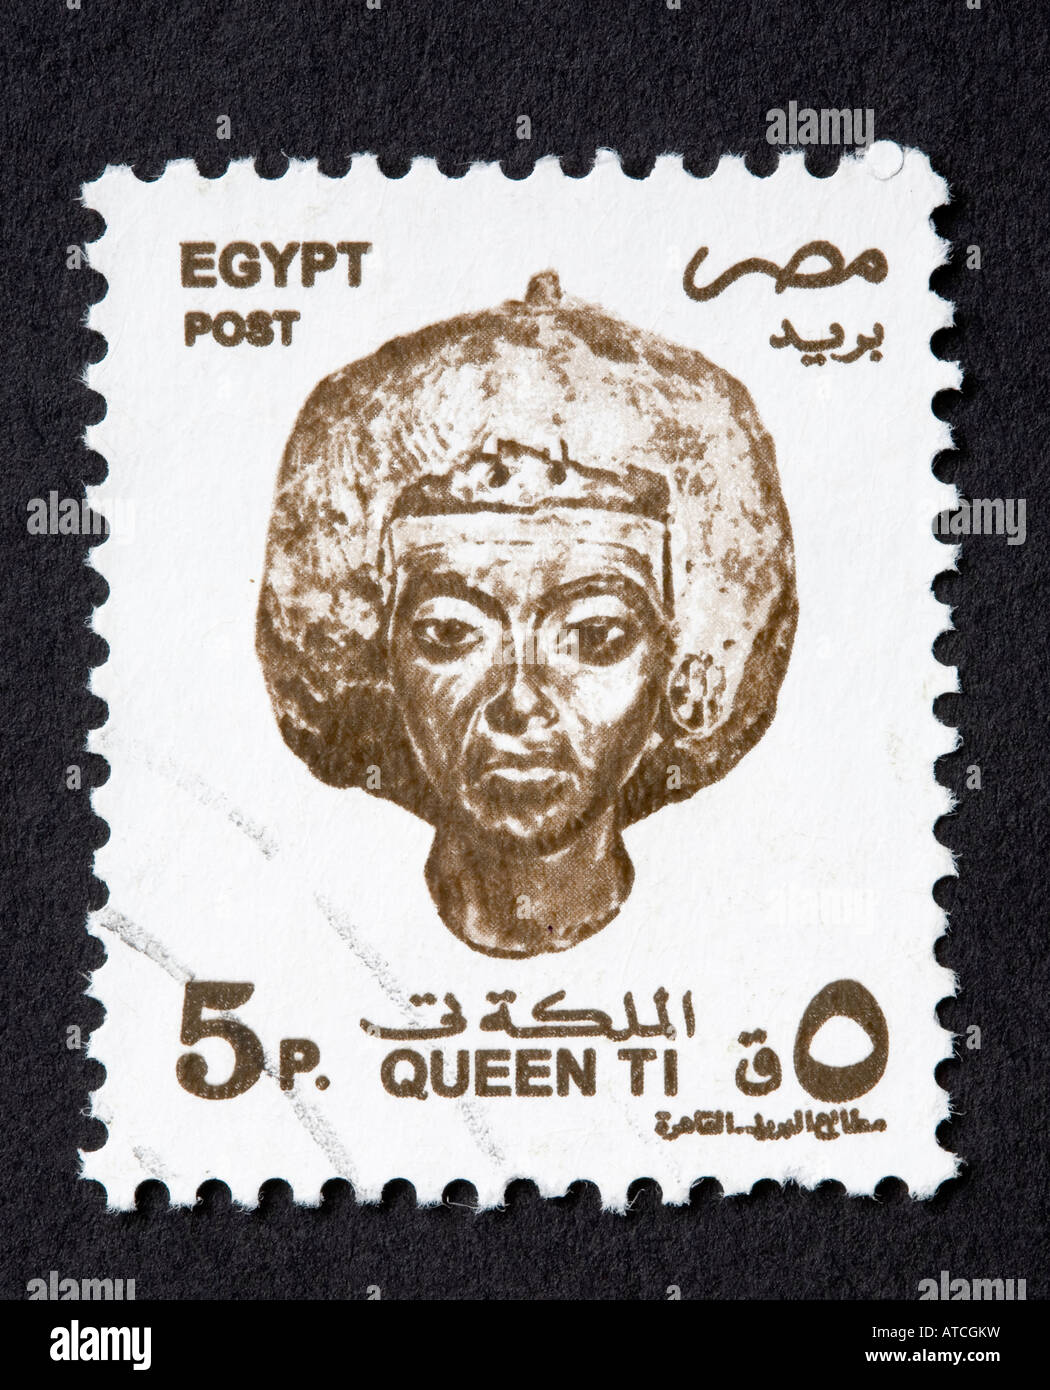 Ägyptische Briefmarke Stockfoto